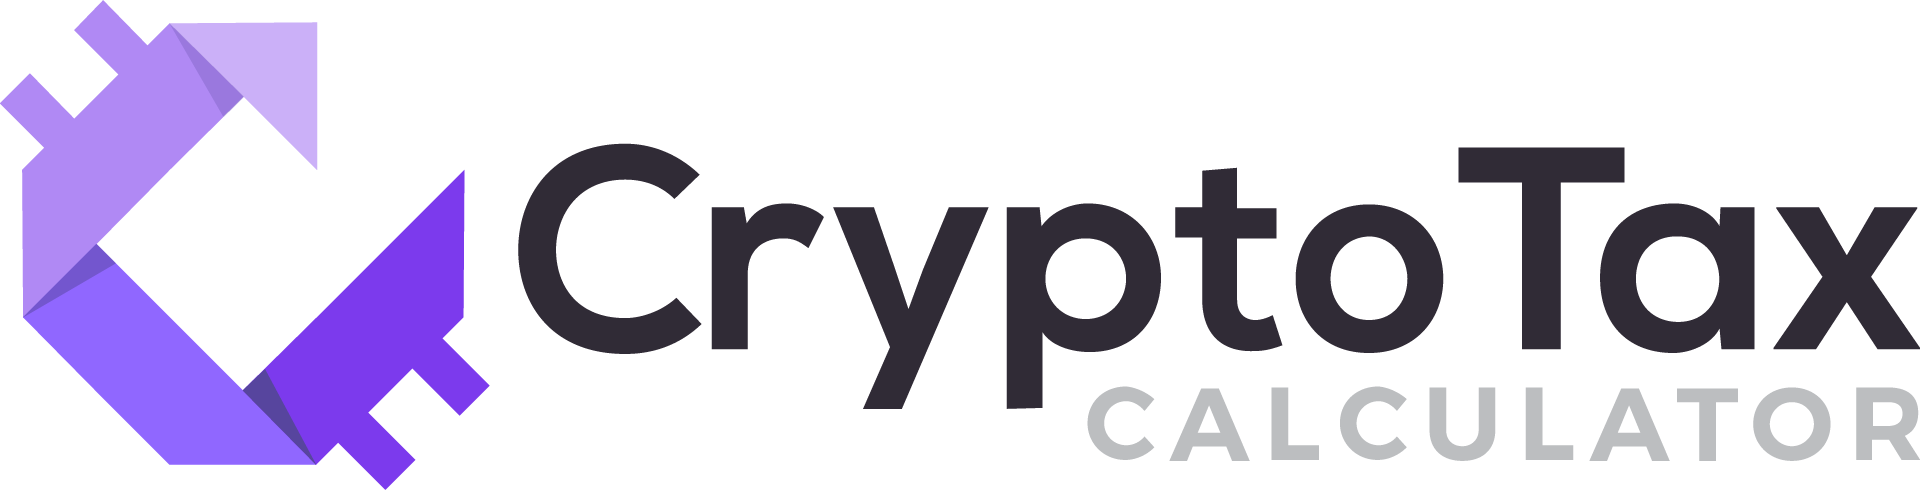 Cryptotaxcalculator